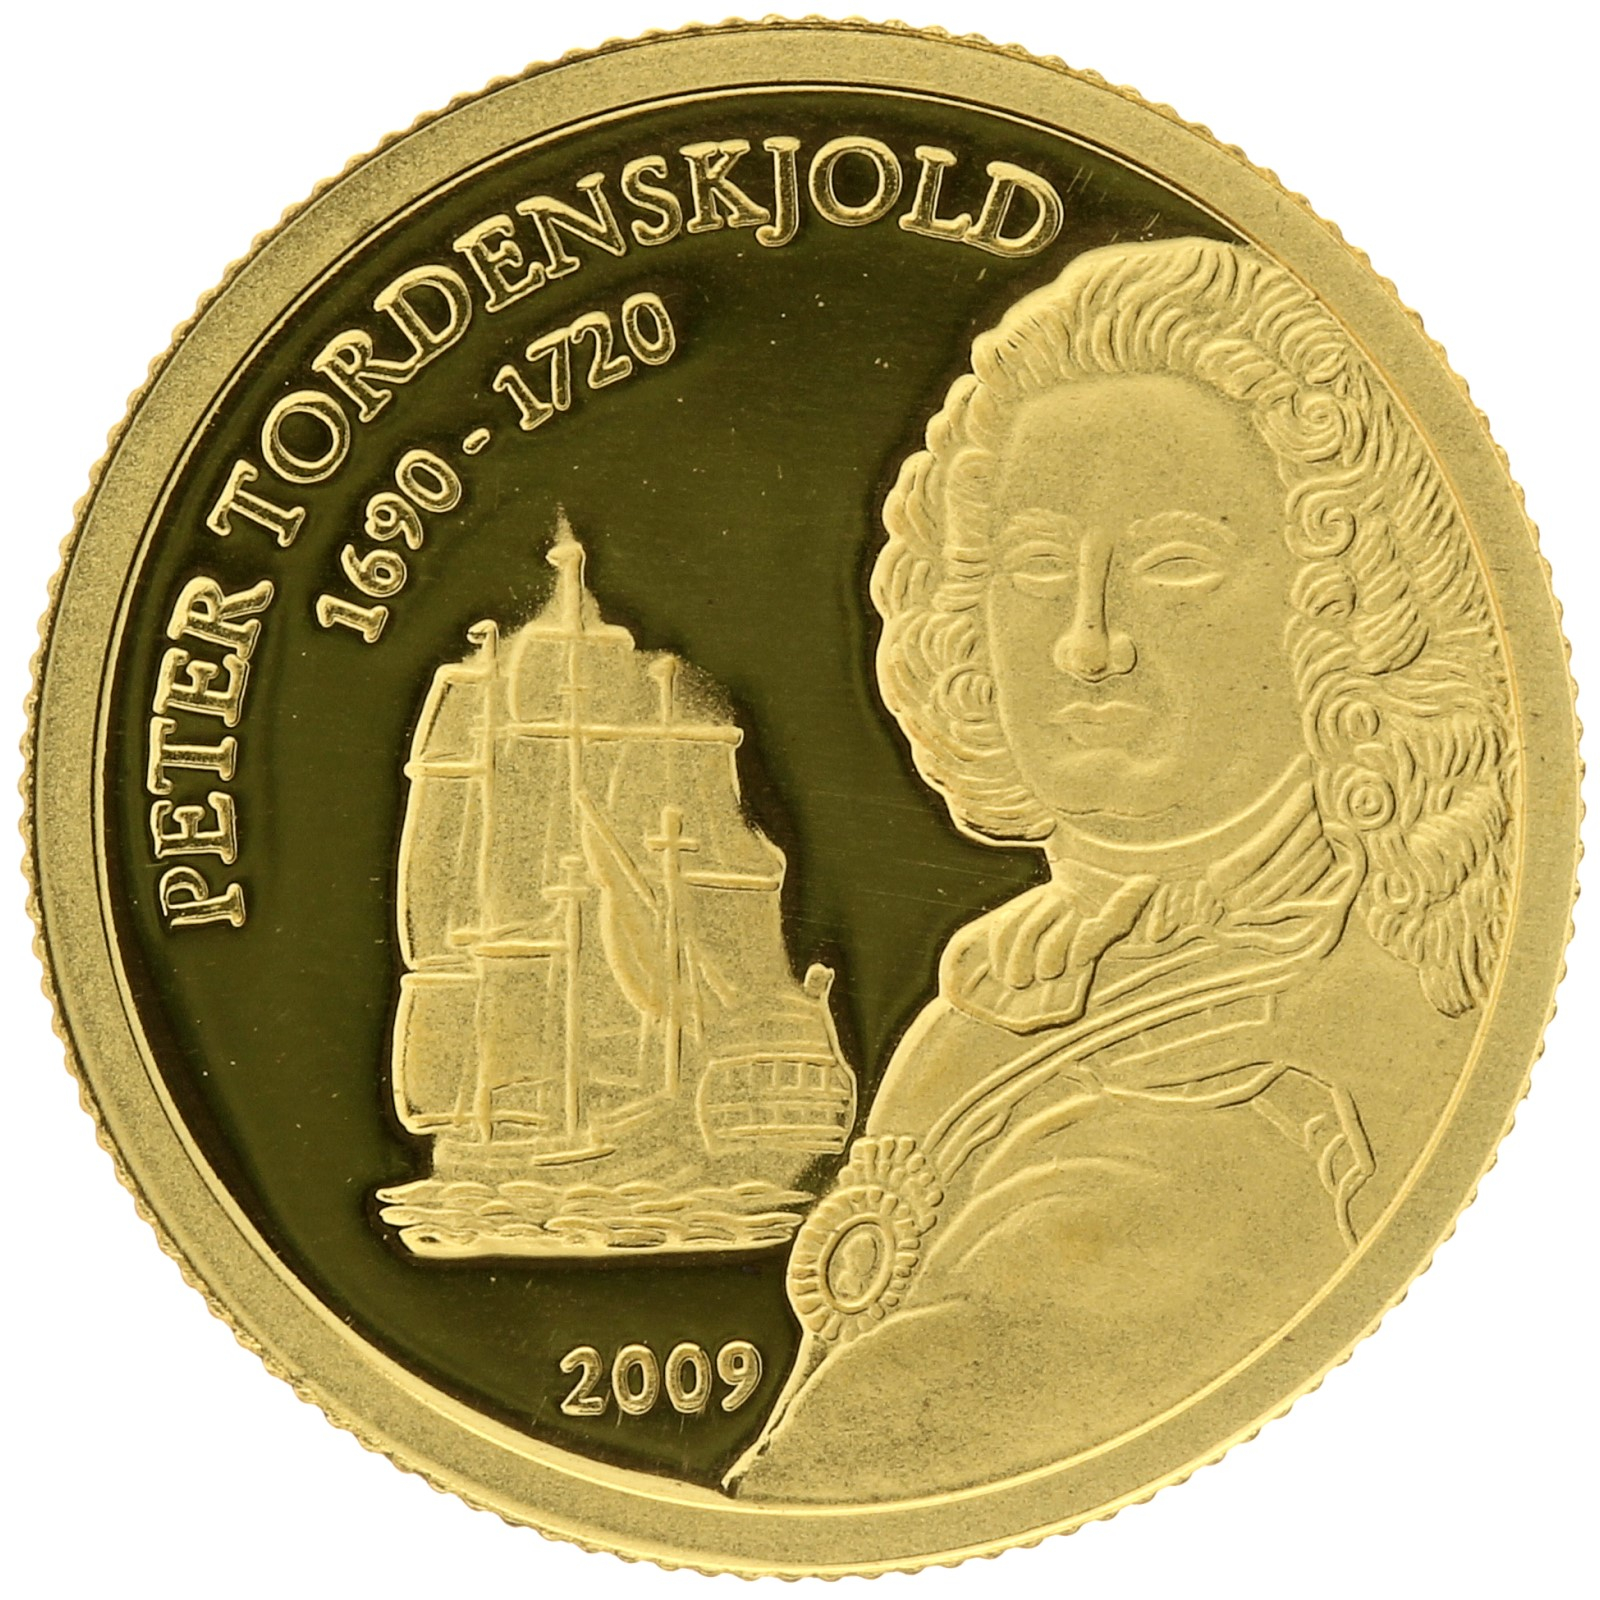 Palau - 1 Dollar - 2009 - Peter Tordenskjold - 1/25oz